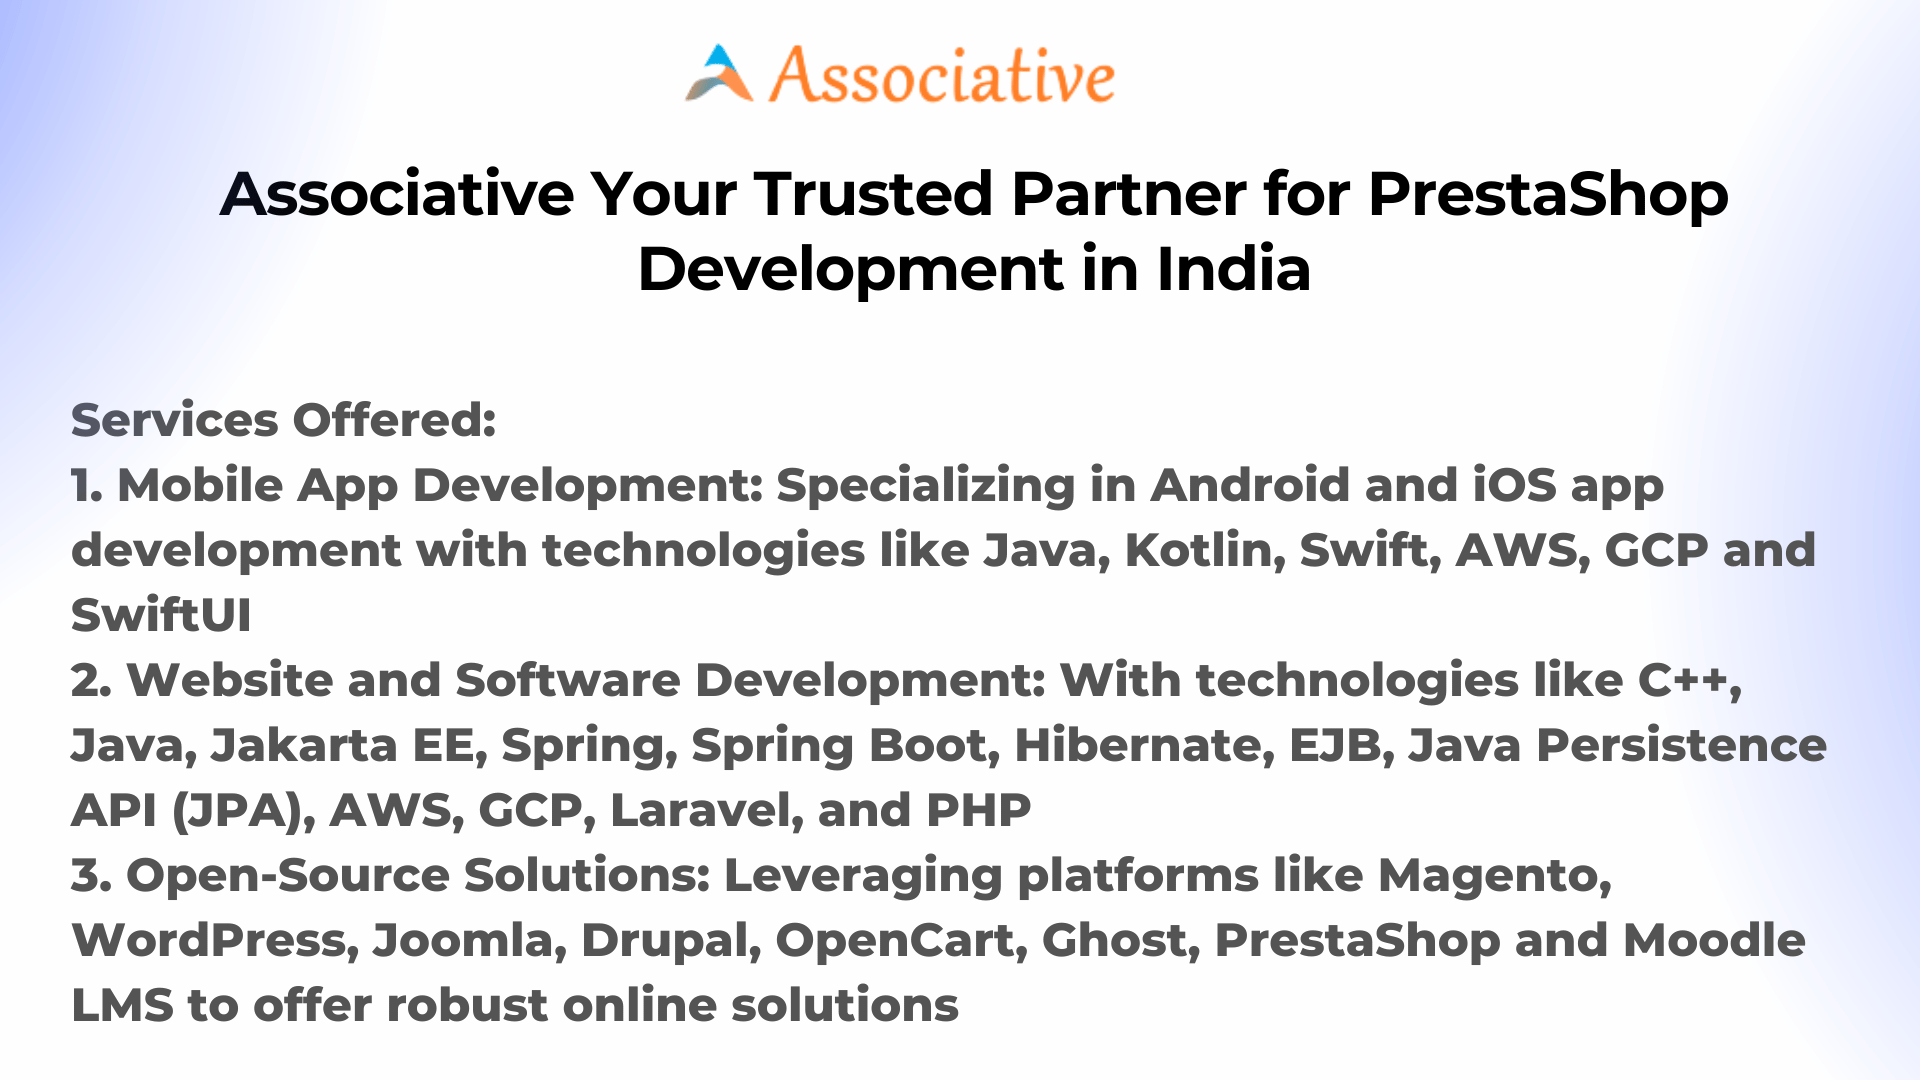 Associative Your Trusted Partner for PrestaShop Development in India